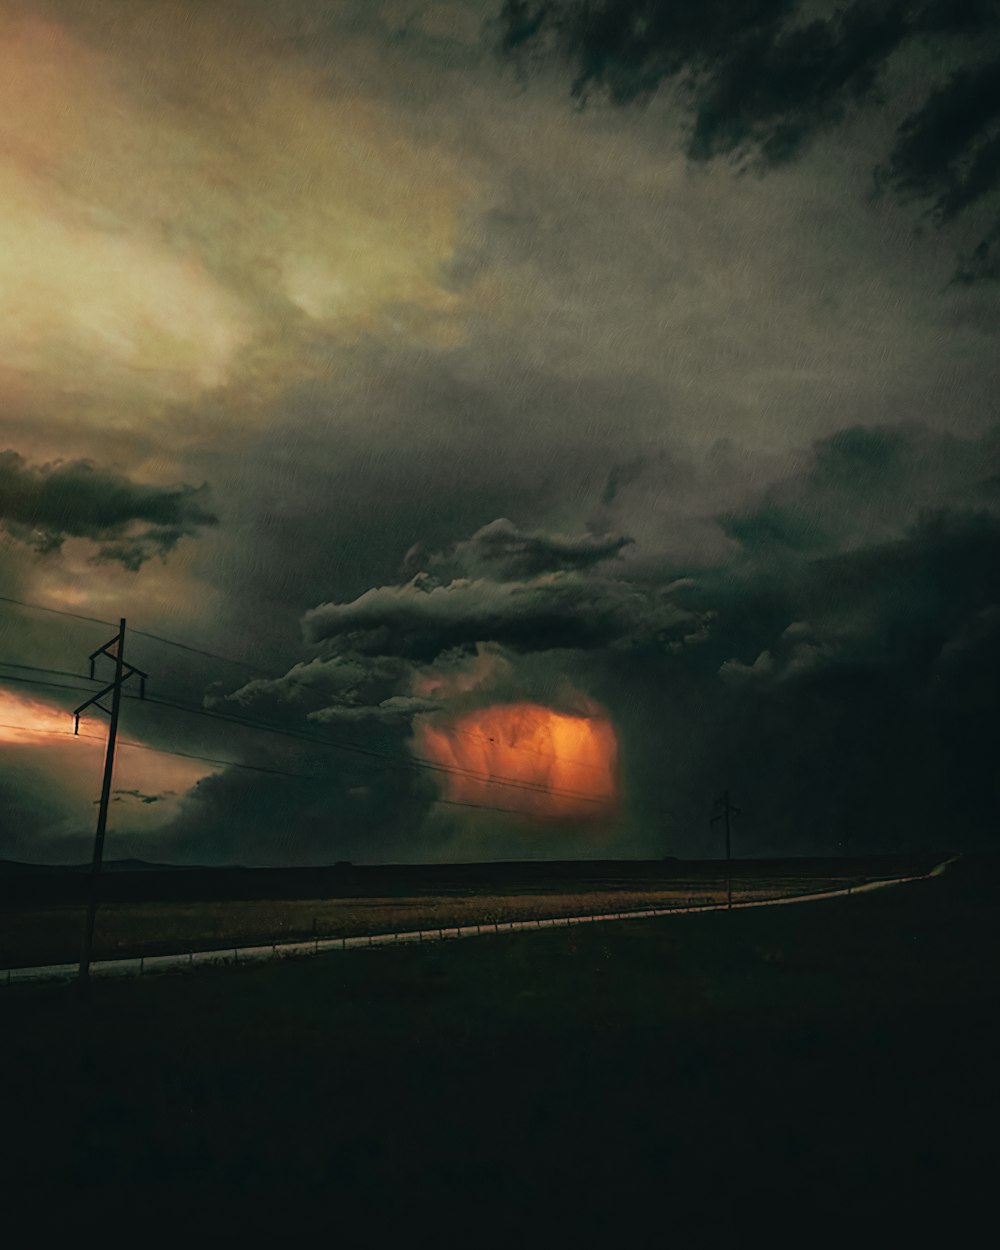 lightning strike on road during night time